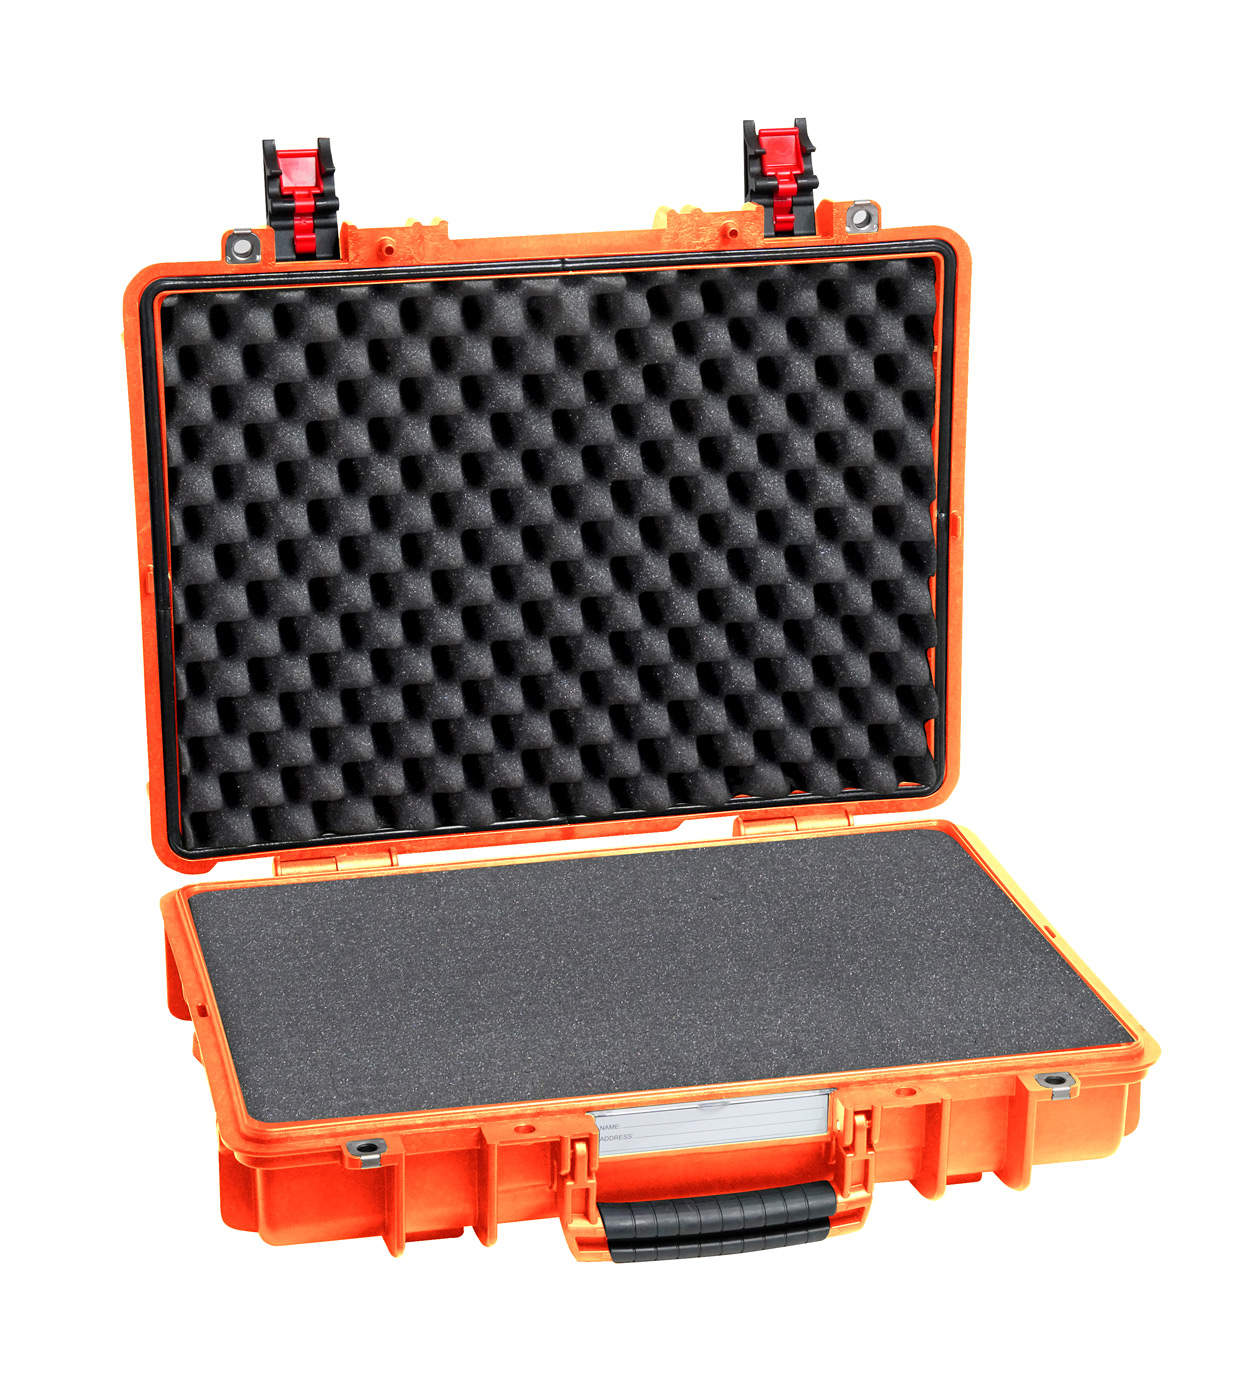 Maleta Explorer Cases 4209 color naranja | Maletas Estancas